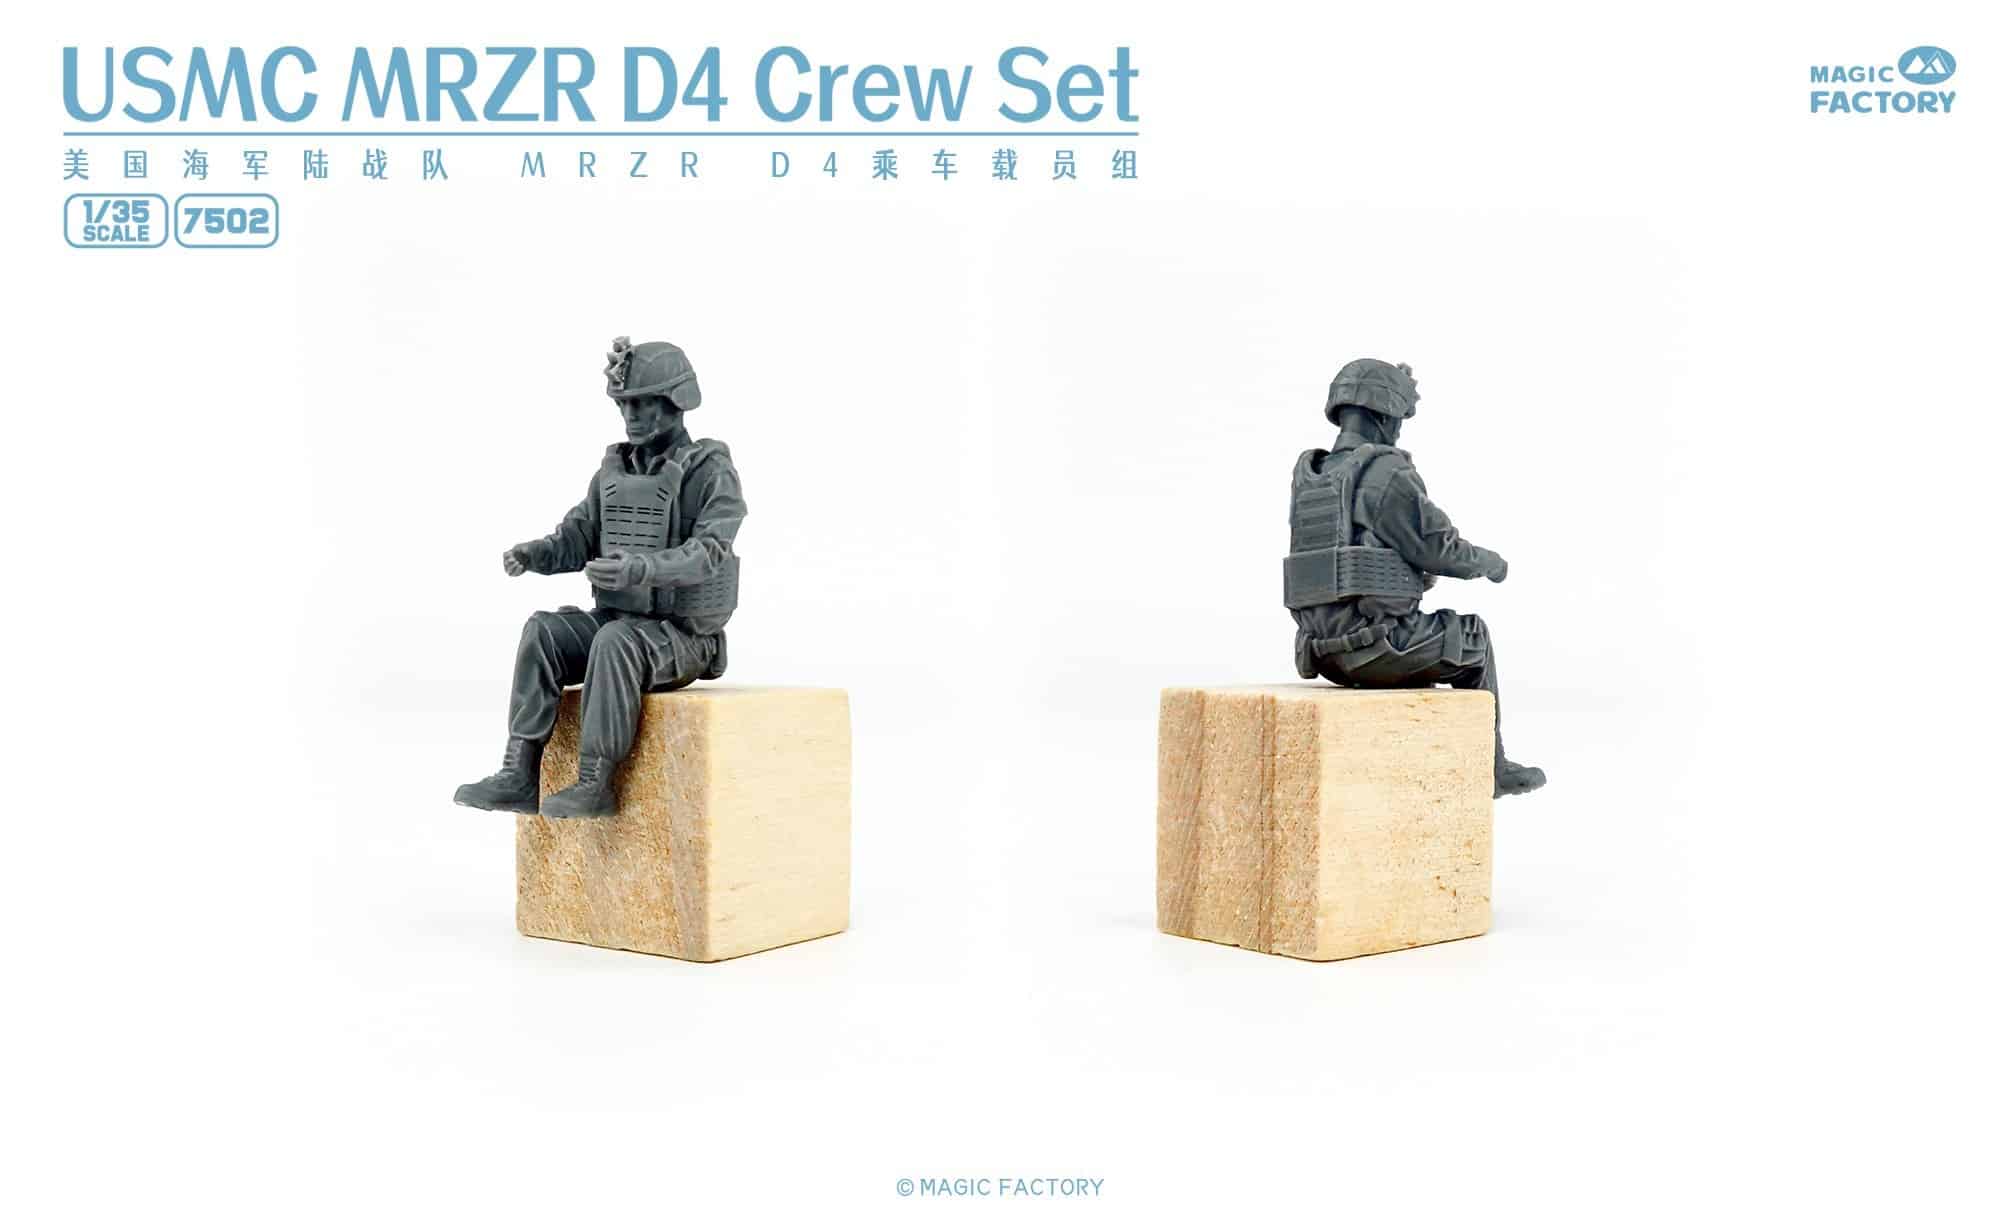 New USMC MRZR D4 Crew Set Available from Magic Factory-5